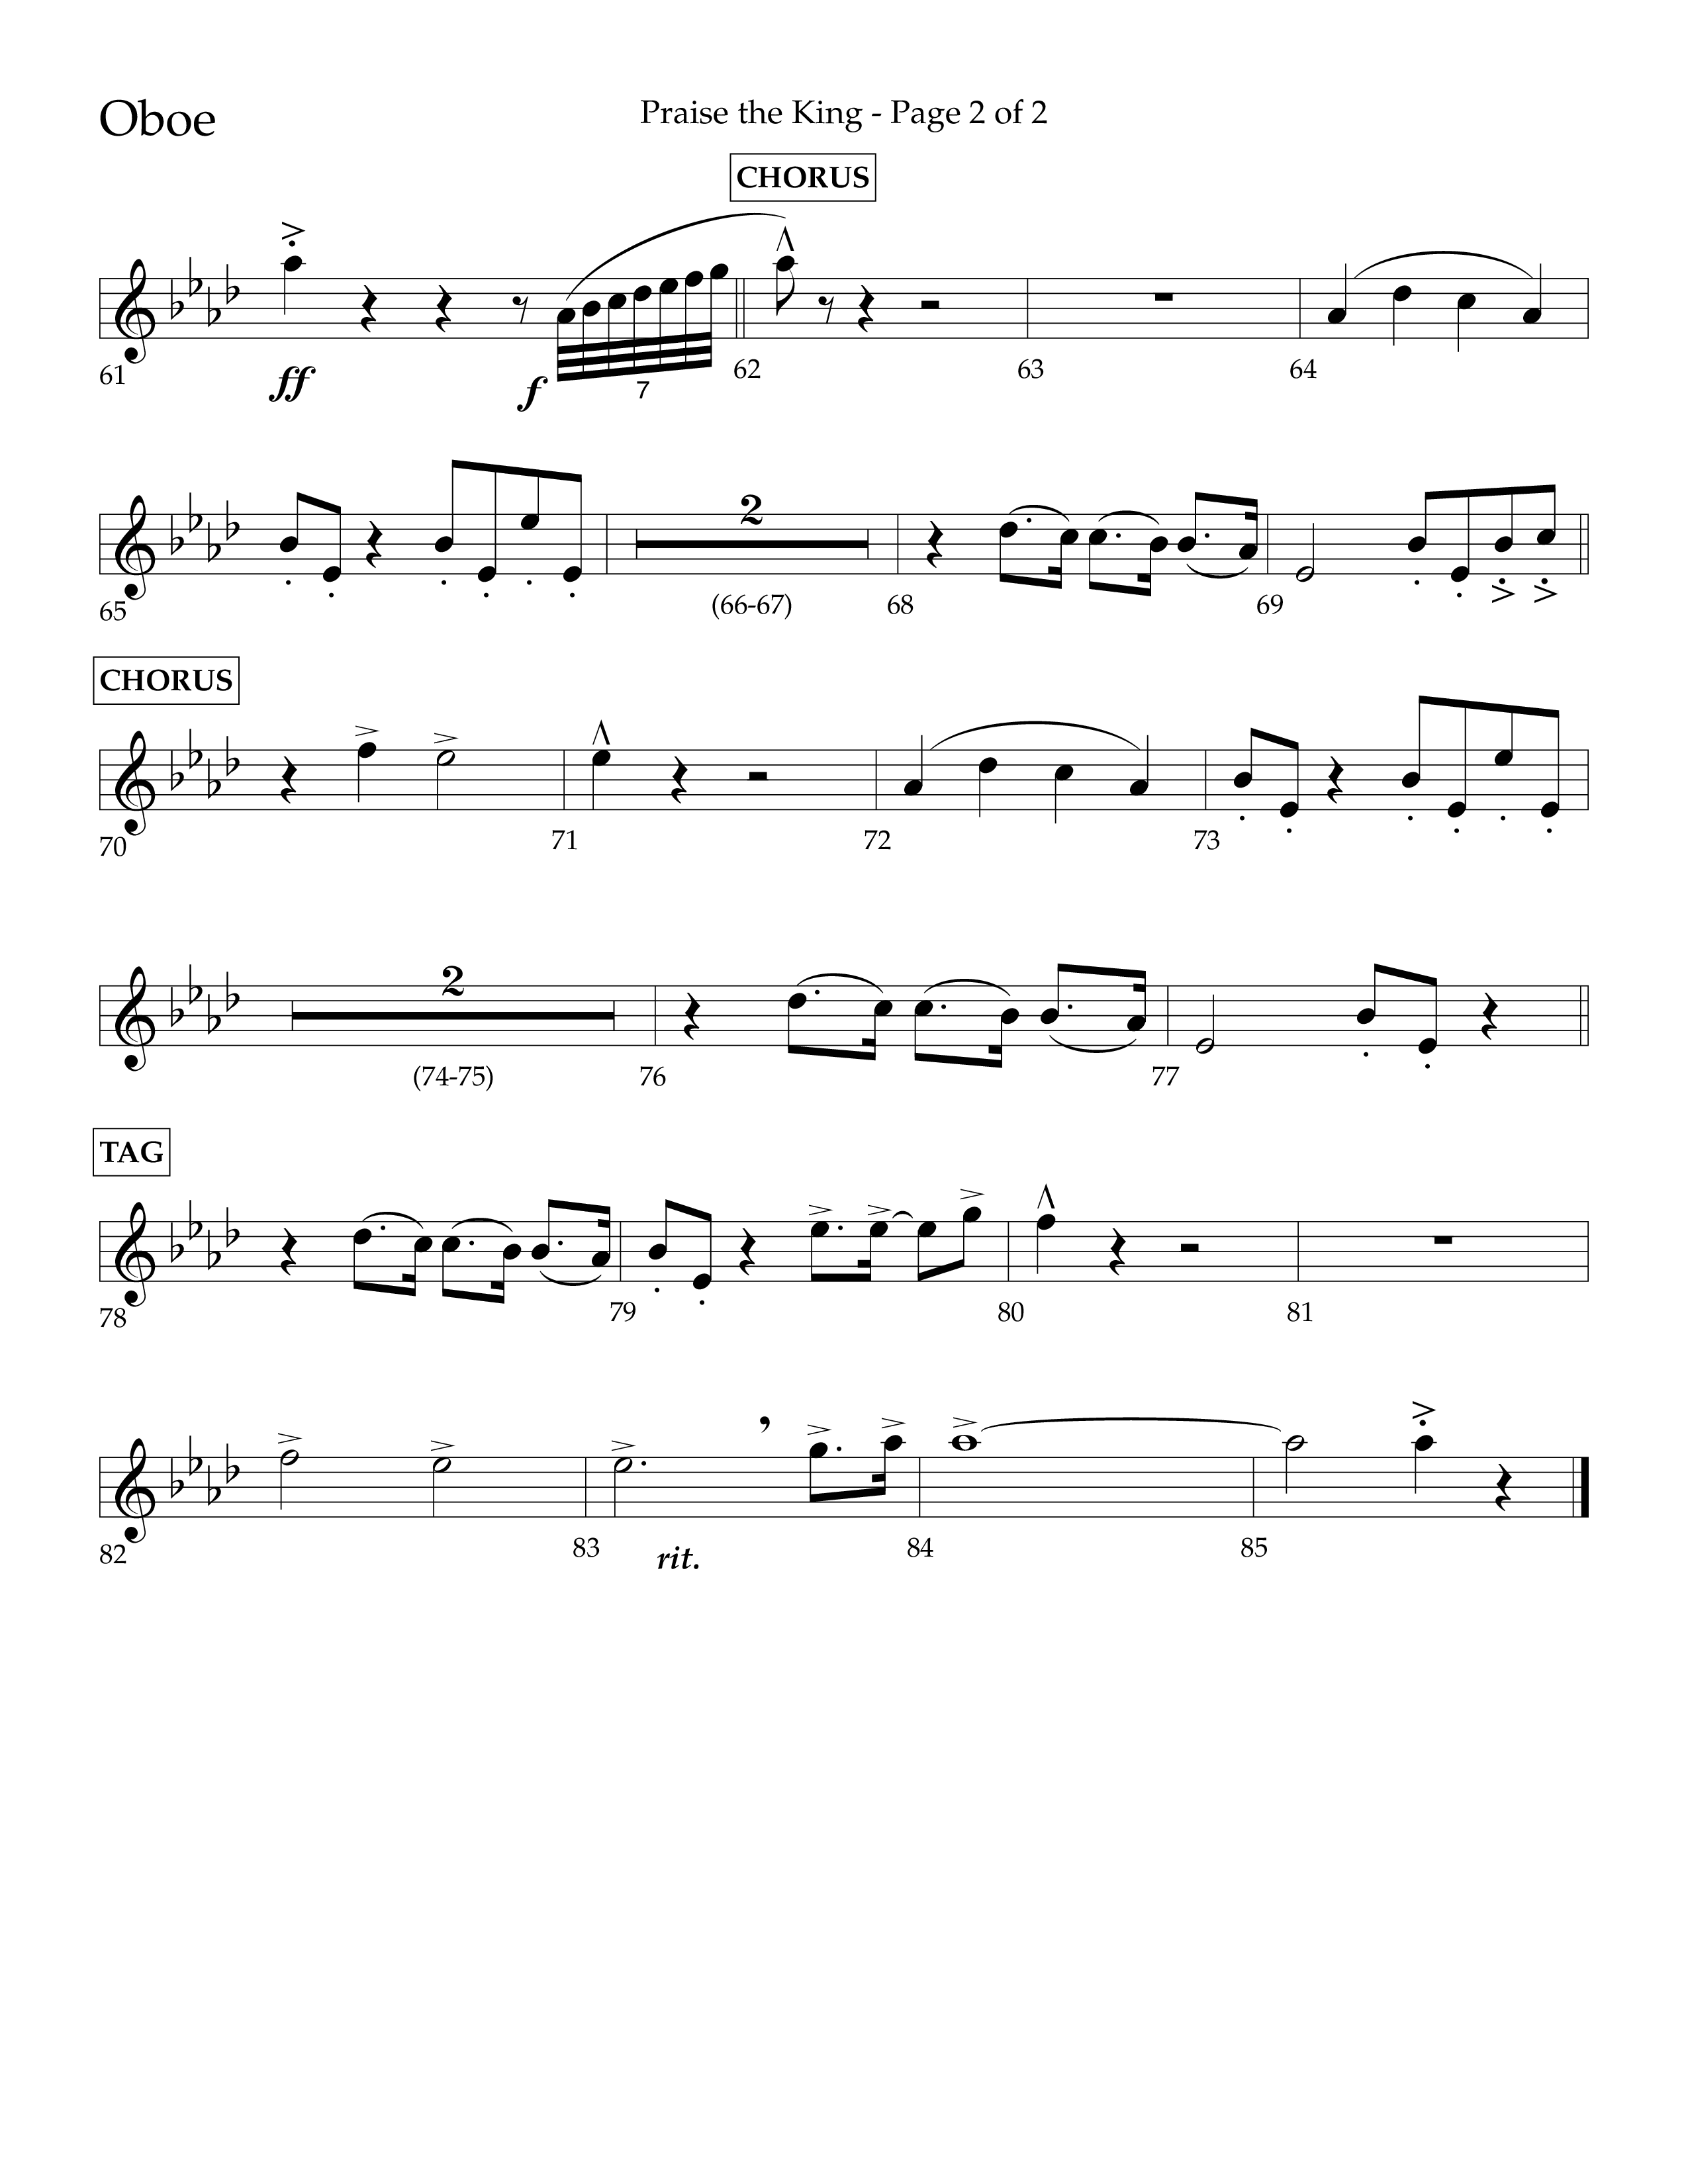 Praise The King (Choral Anthem SATB) Oboe (Lifeway Choral / Arr. Phil Nitz)